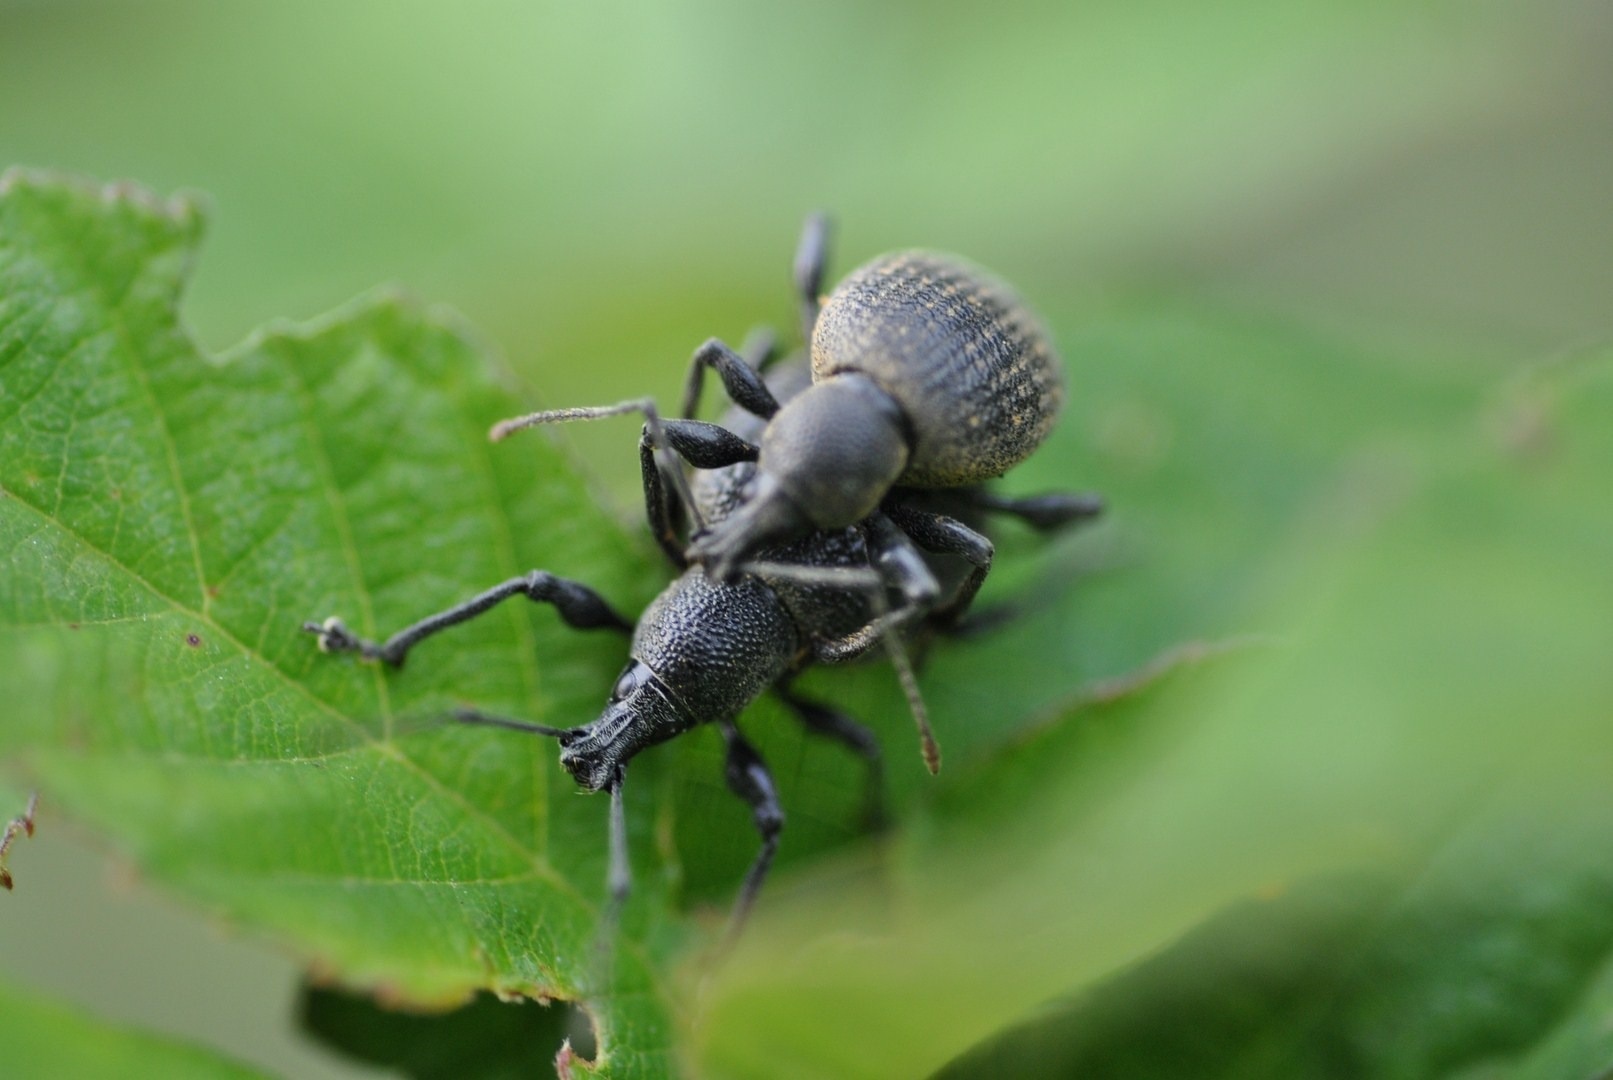 2 black mating granary weevils